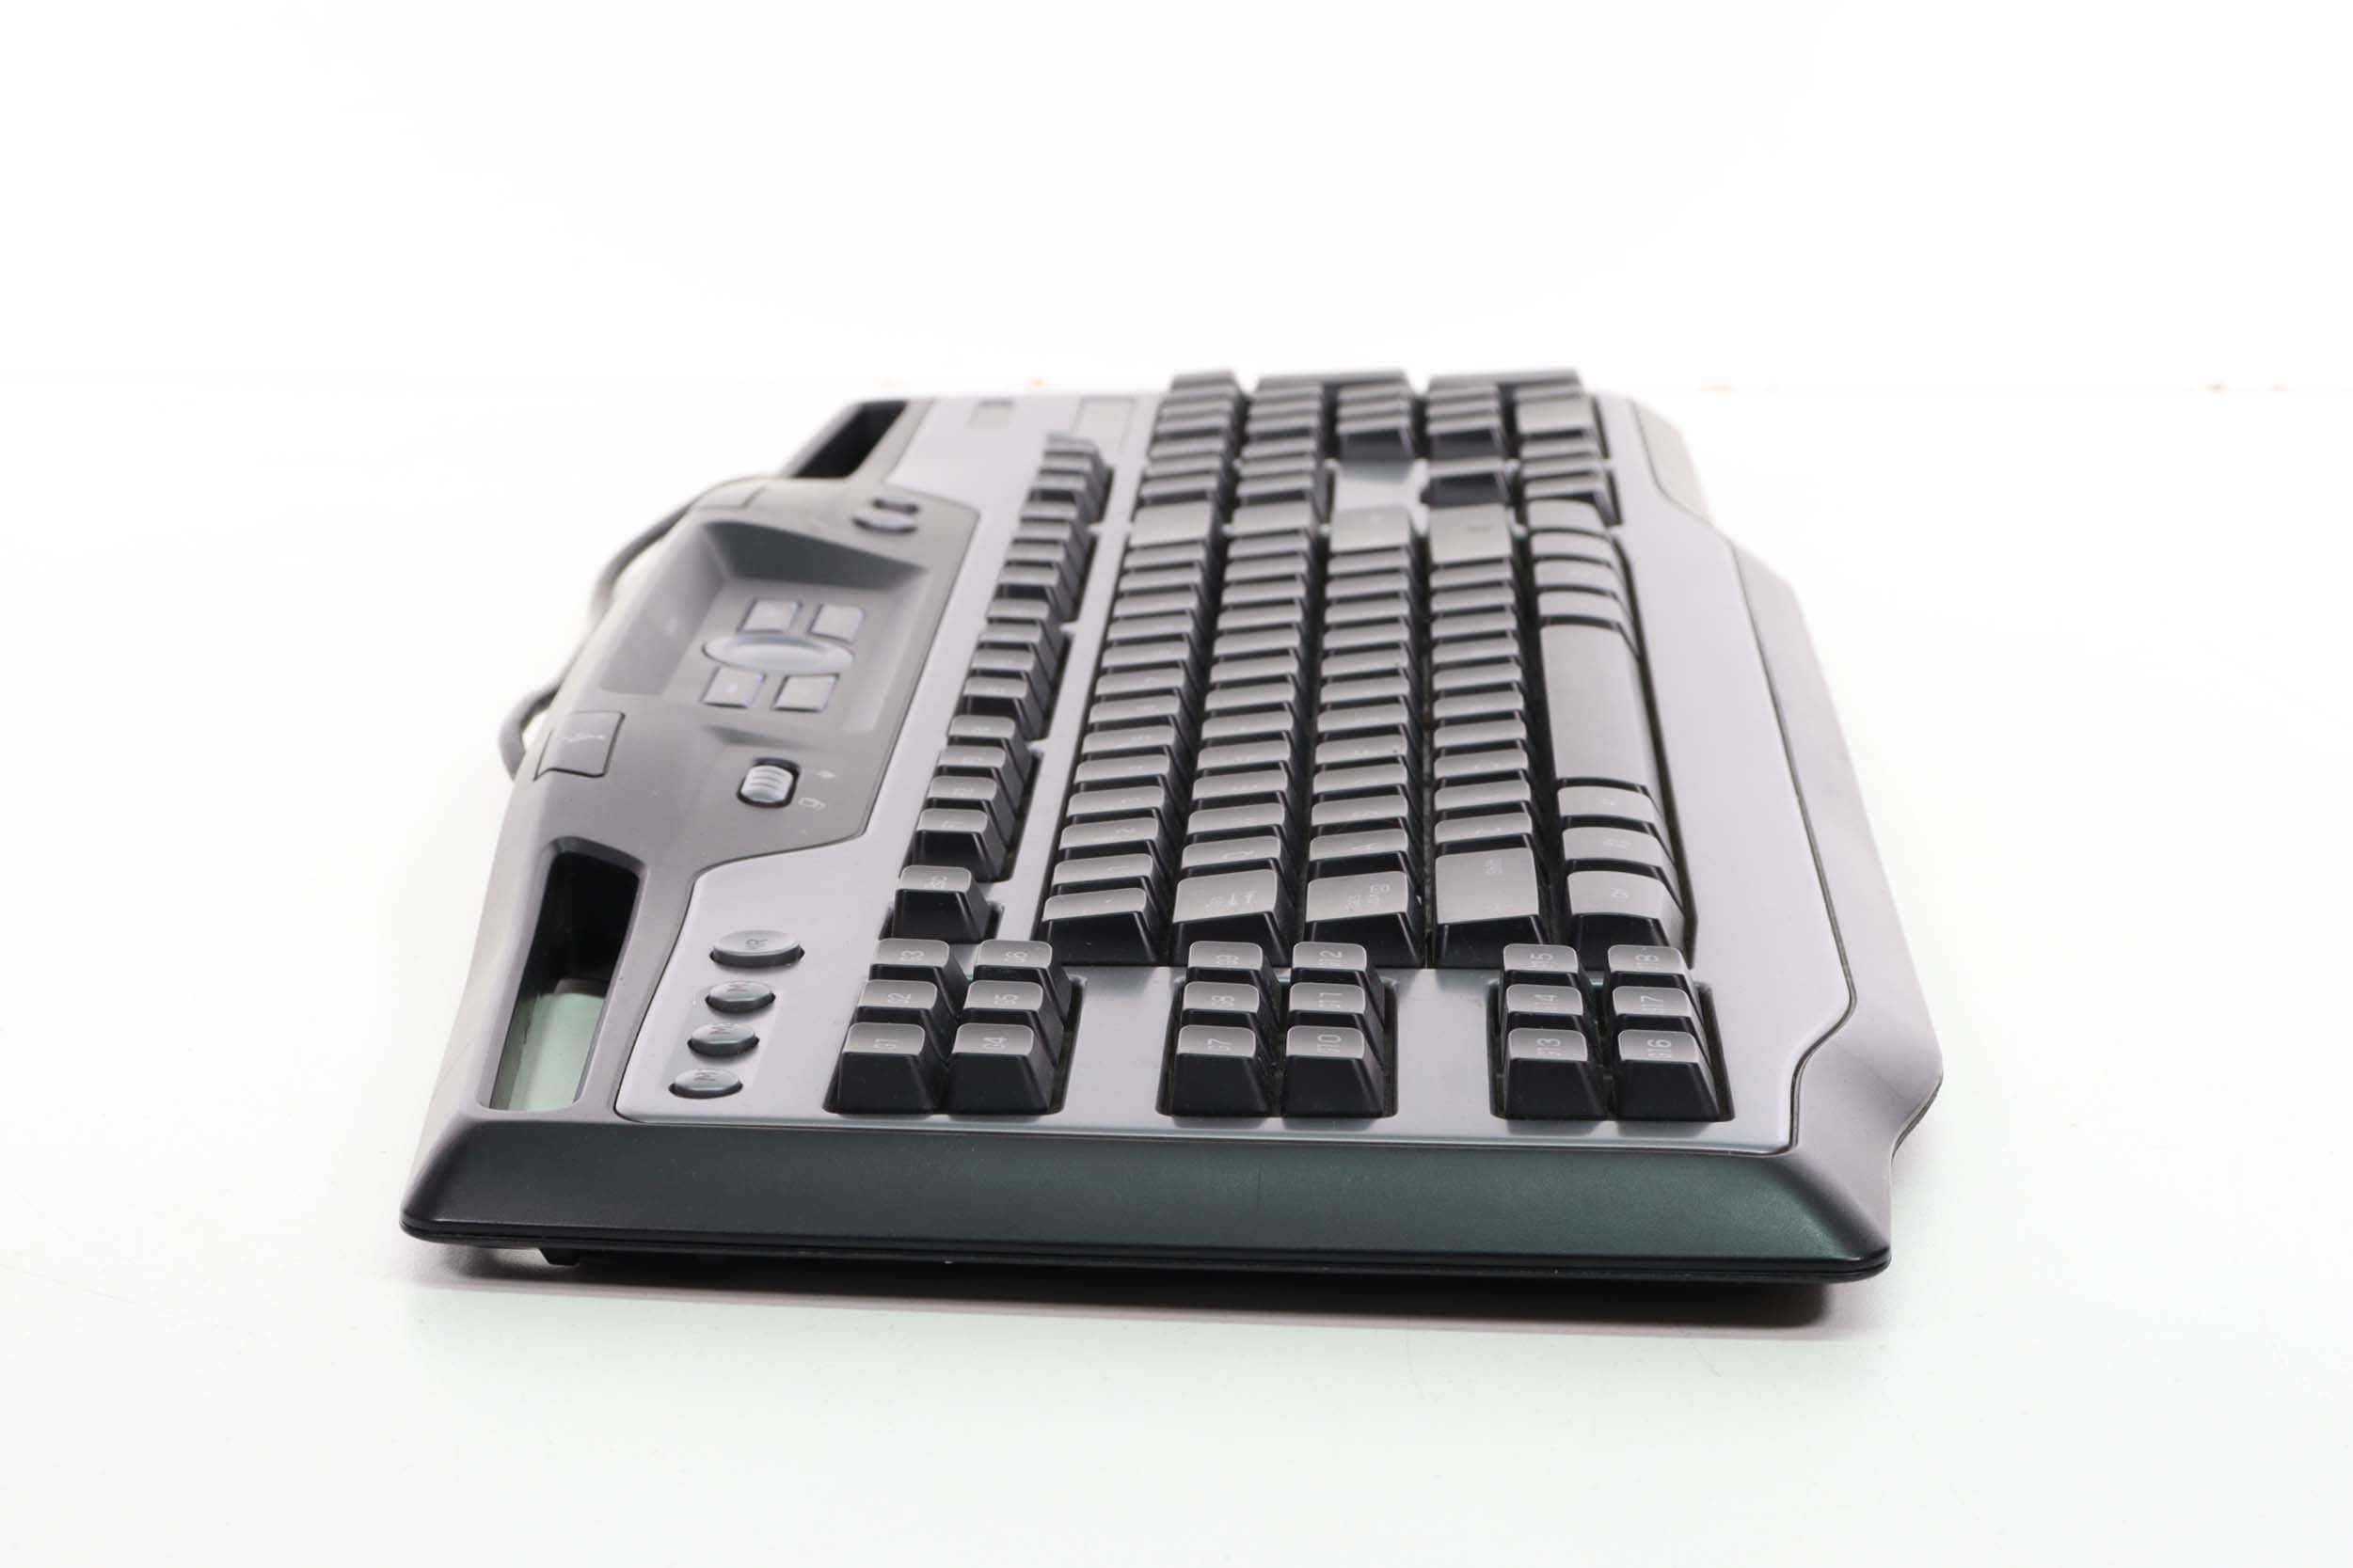 Logitech G11 PC Keyboard Computer Typing